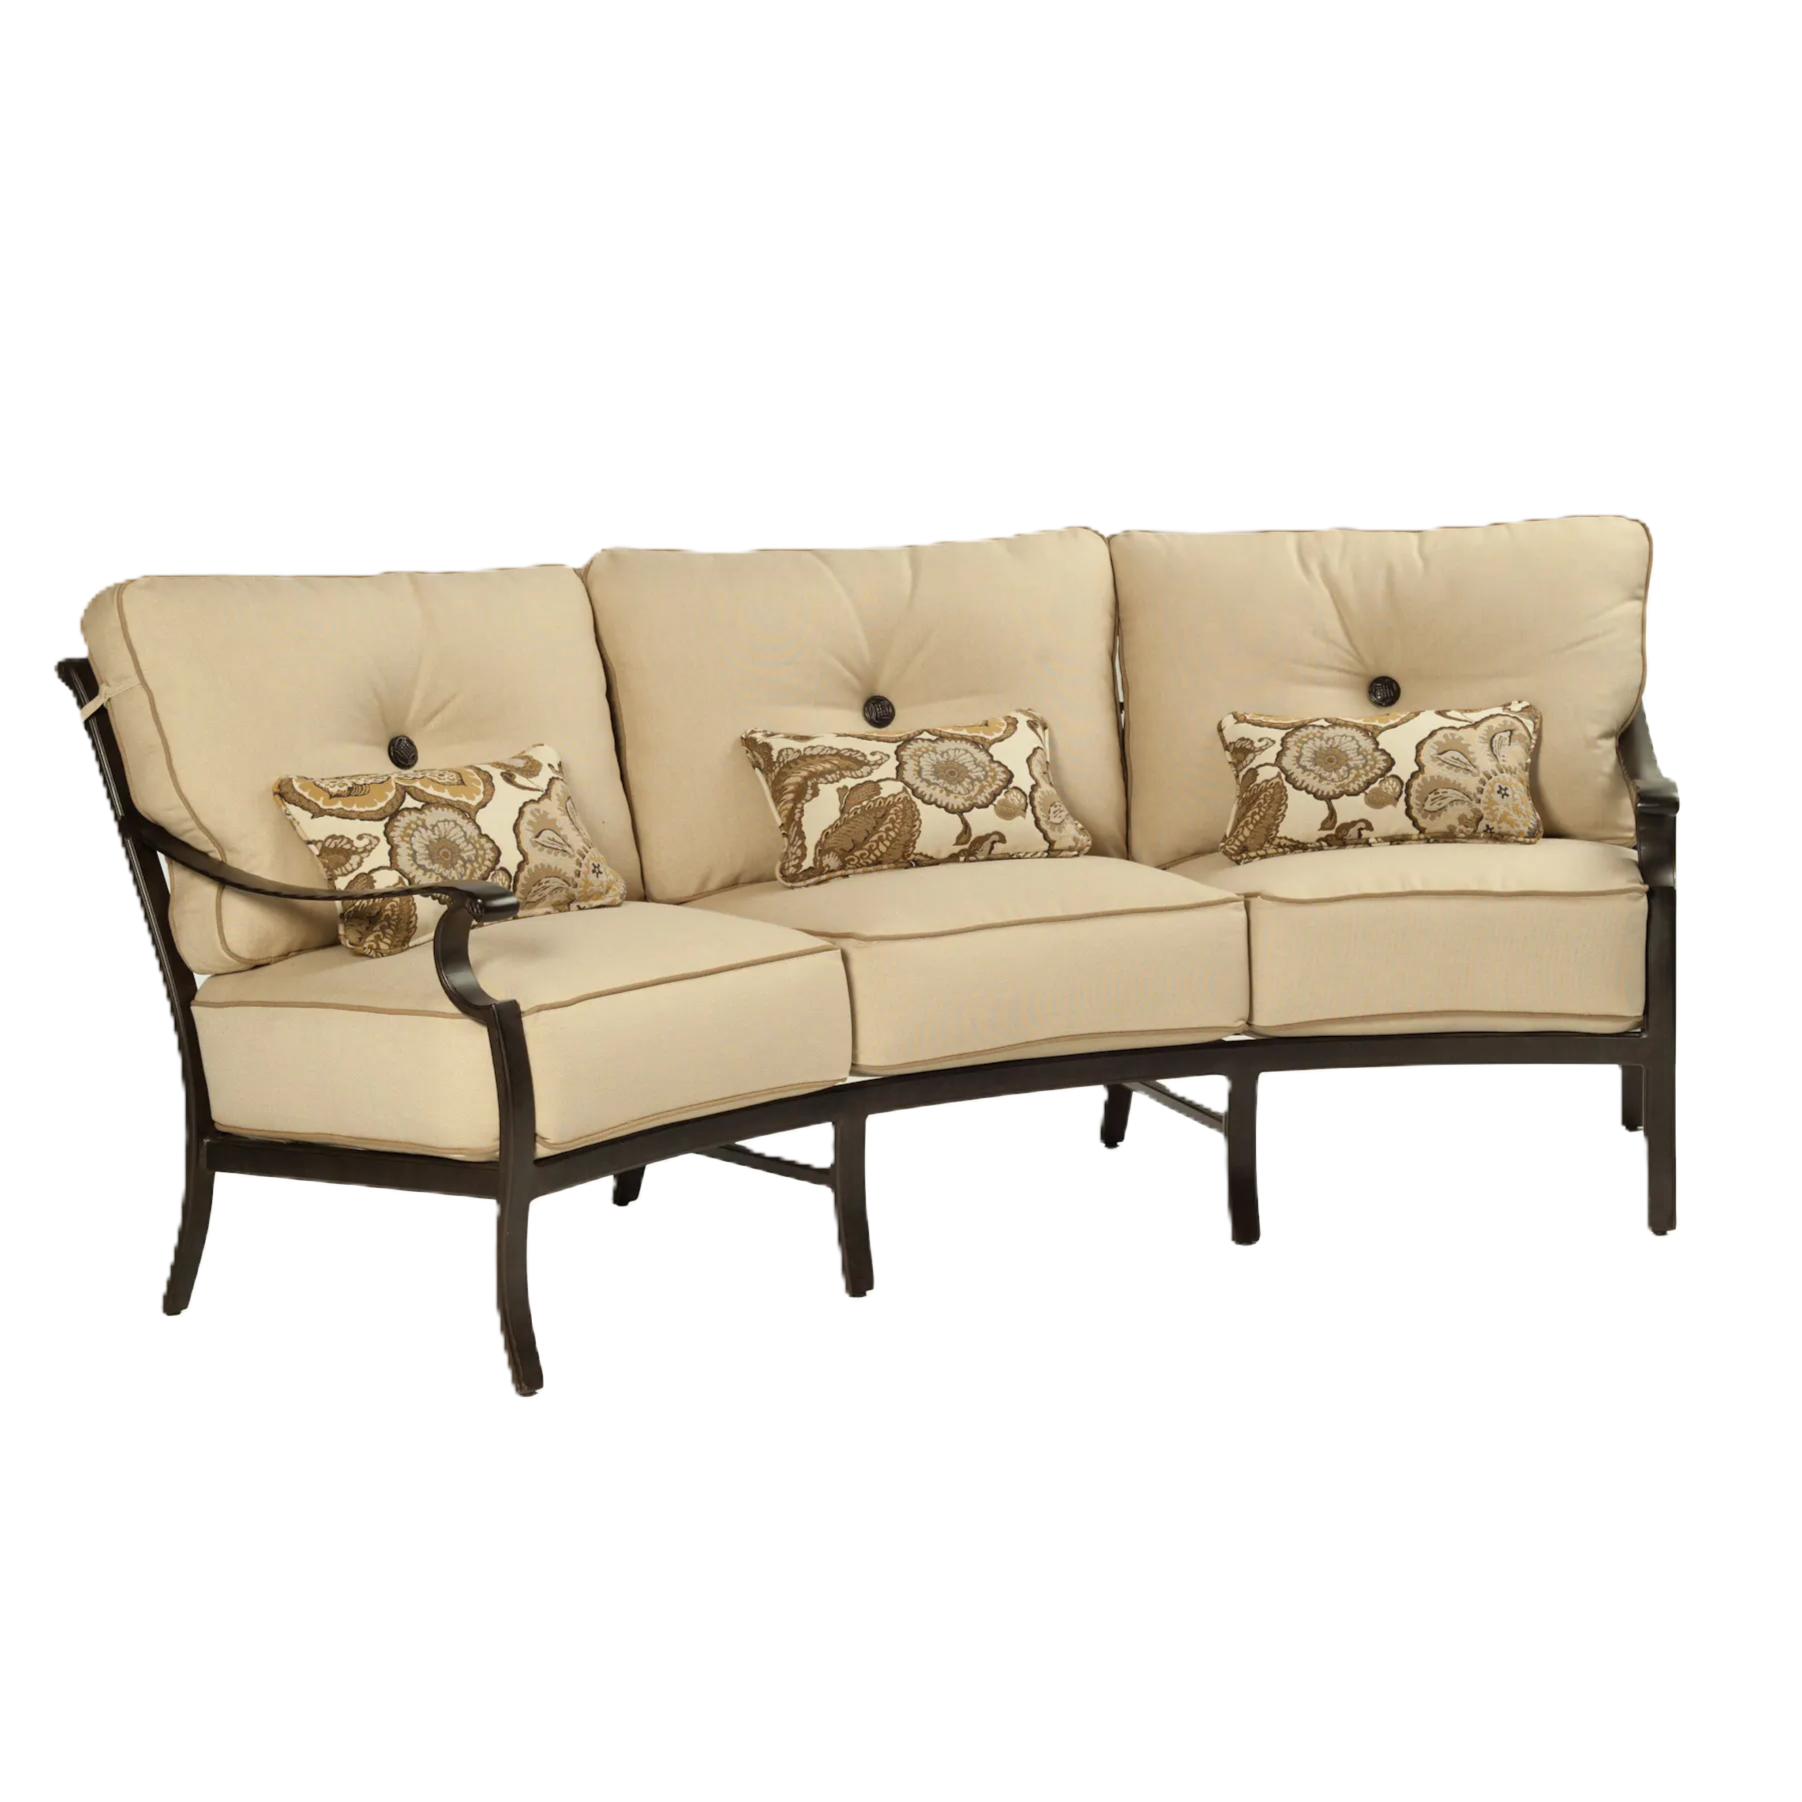 Castelle Monterey Cushioned Crescent Sofa in Antique Dark Rum Finish with Chartres Malt Cushions 12034204